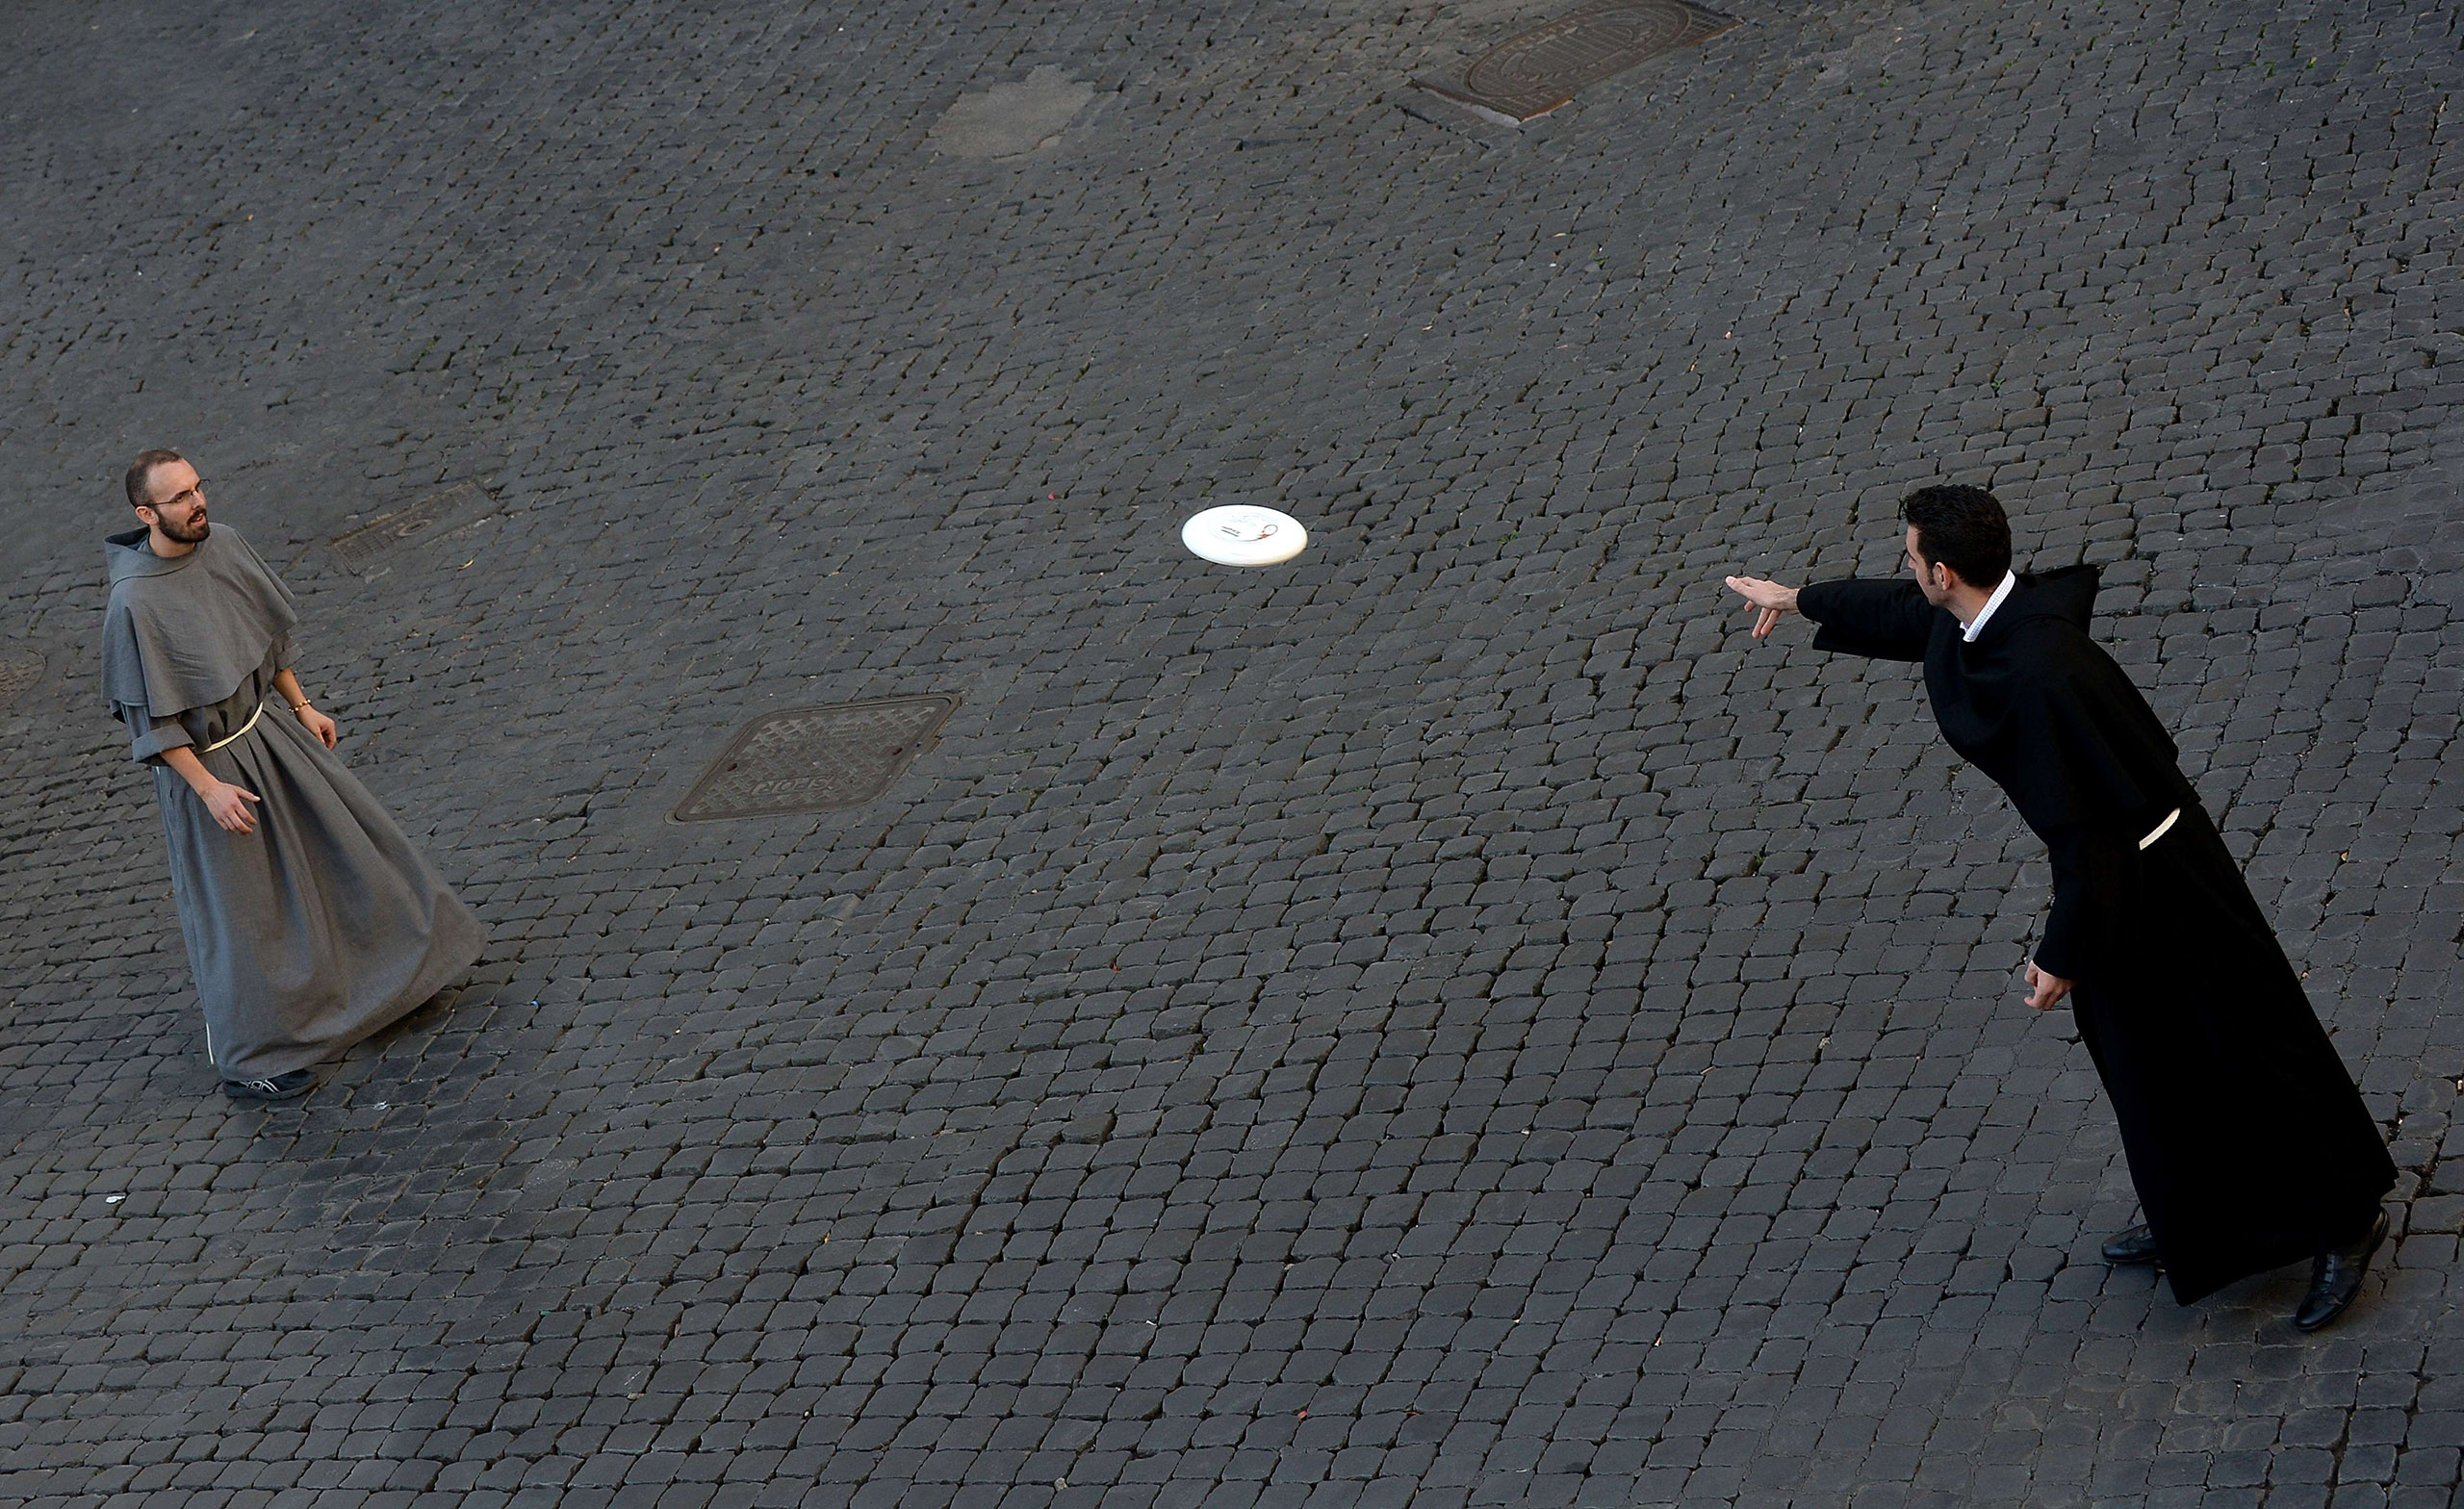 Friars play frisbee at Piazza Santi Apostoli on Nov. 9, 2014 in Rome.